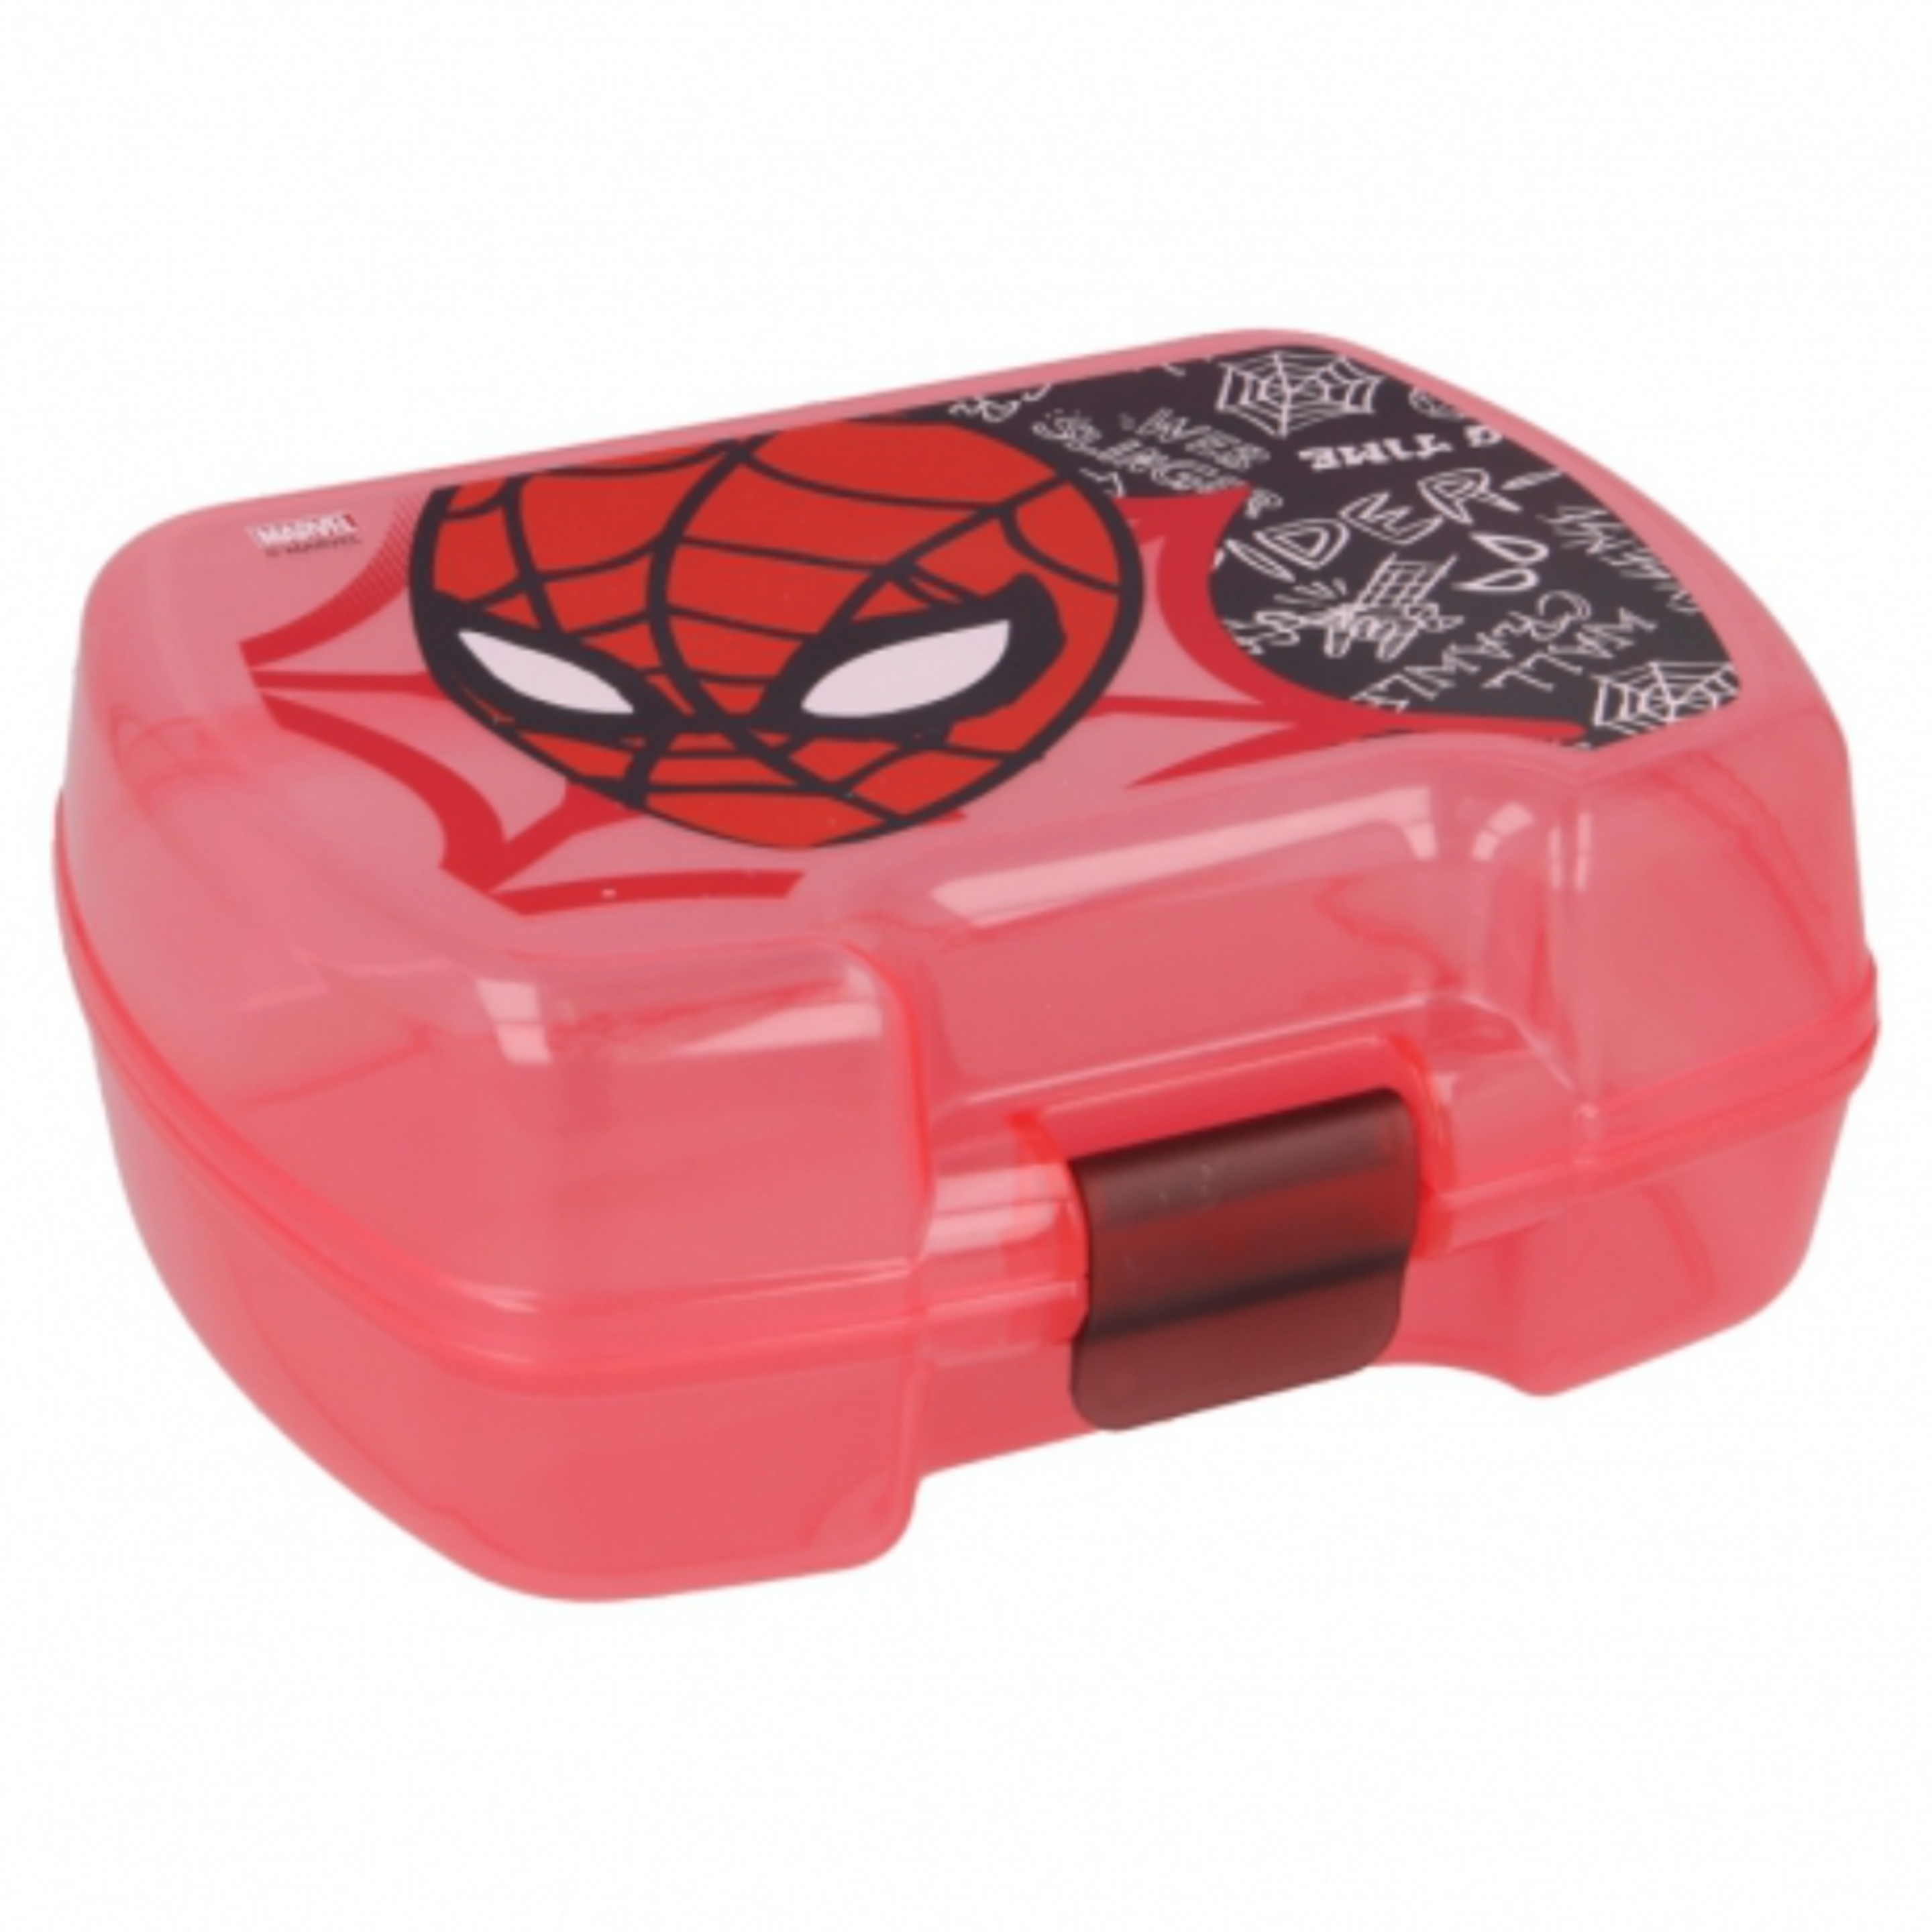 Sandwichera Spiderman 65657 - Rojo  MKP